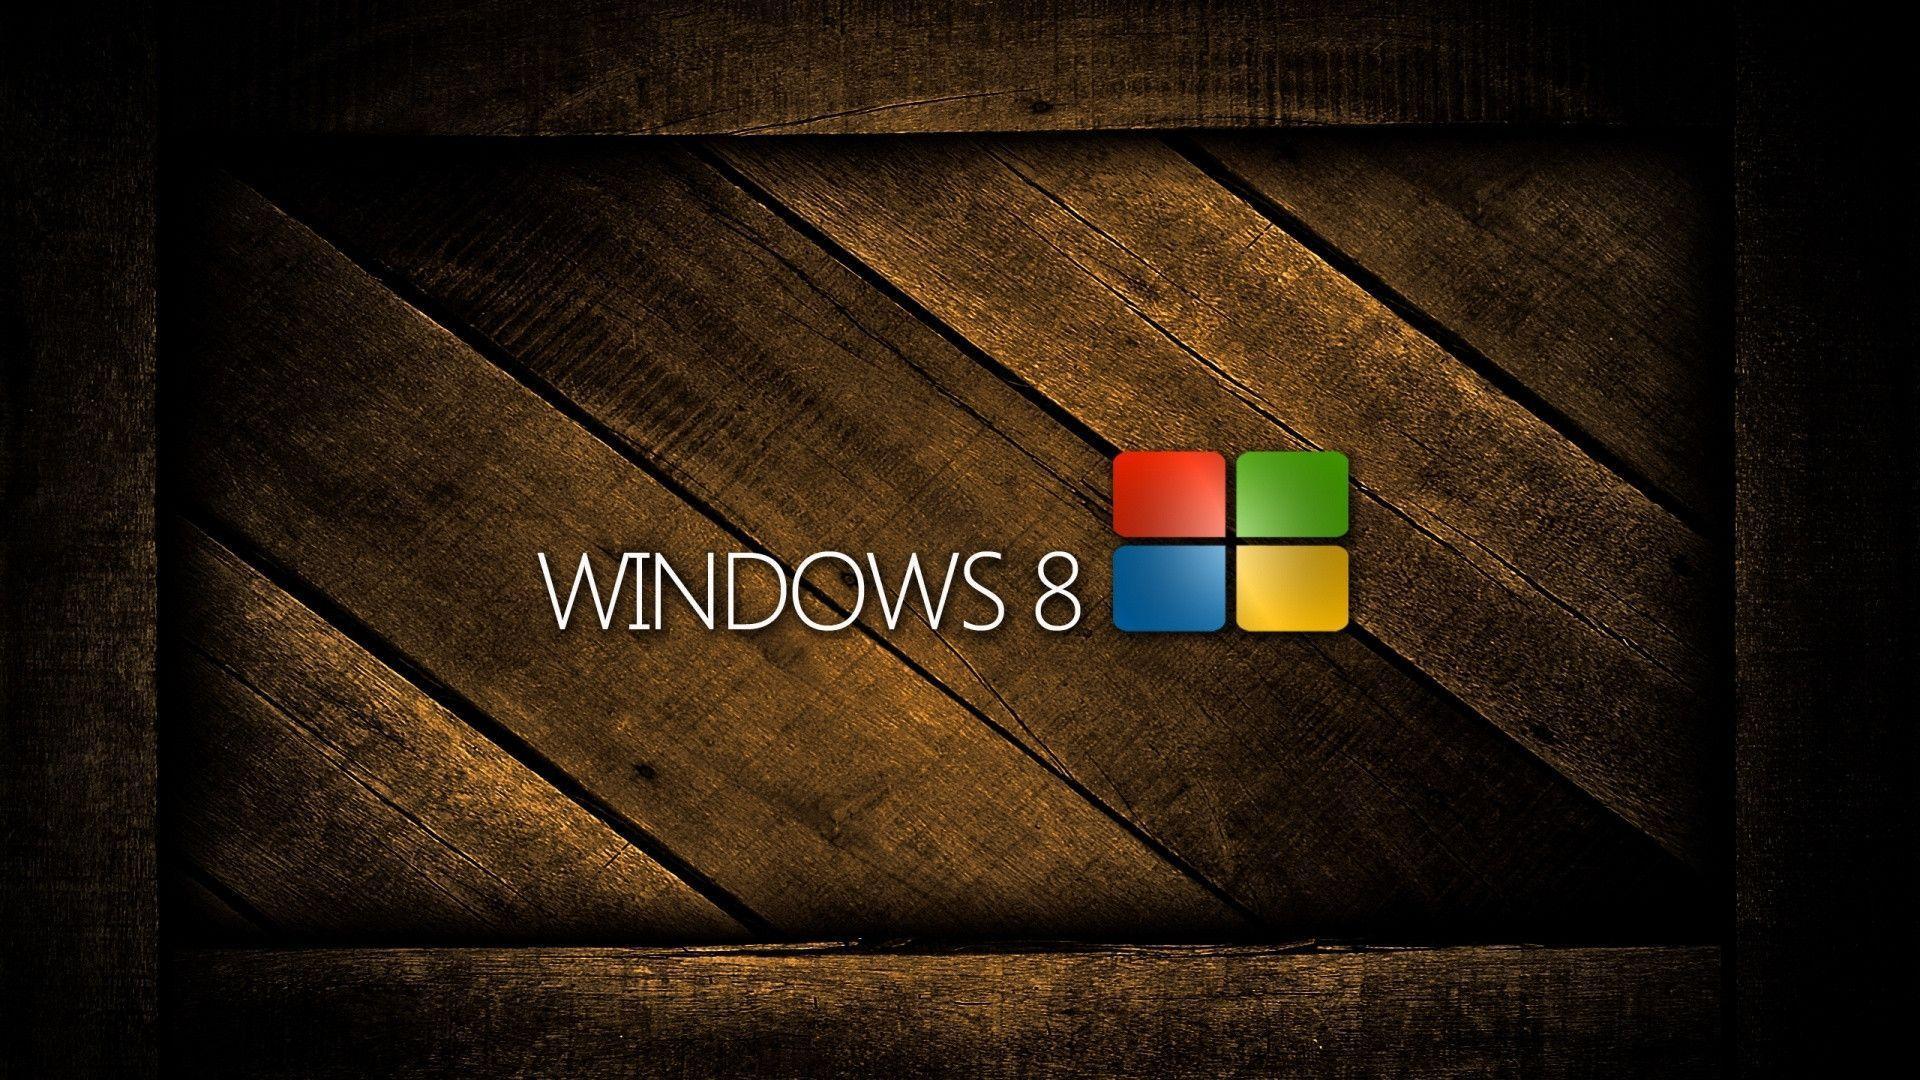 Wallpaper For > Windows 8 Wallpaper 1920x1080